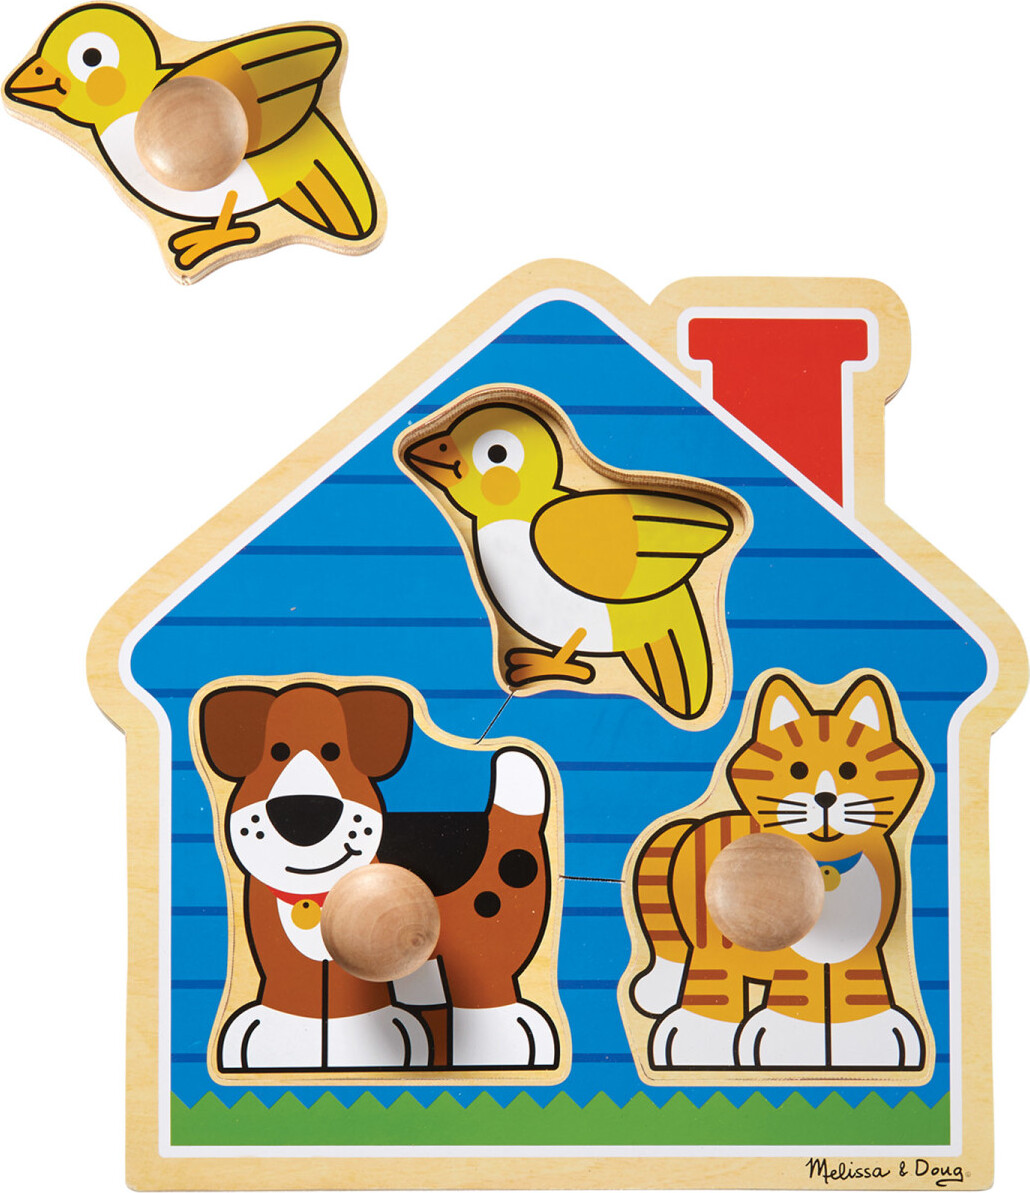 House Pets Jumbo Knob Puzzle Melissa & Doug 000772020558 for sale online 